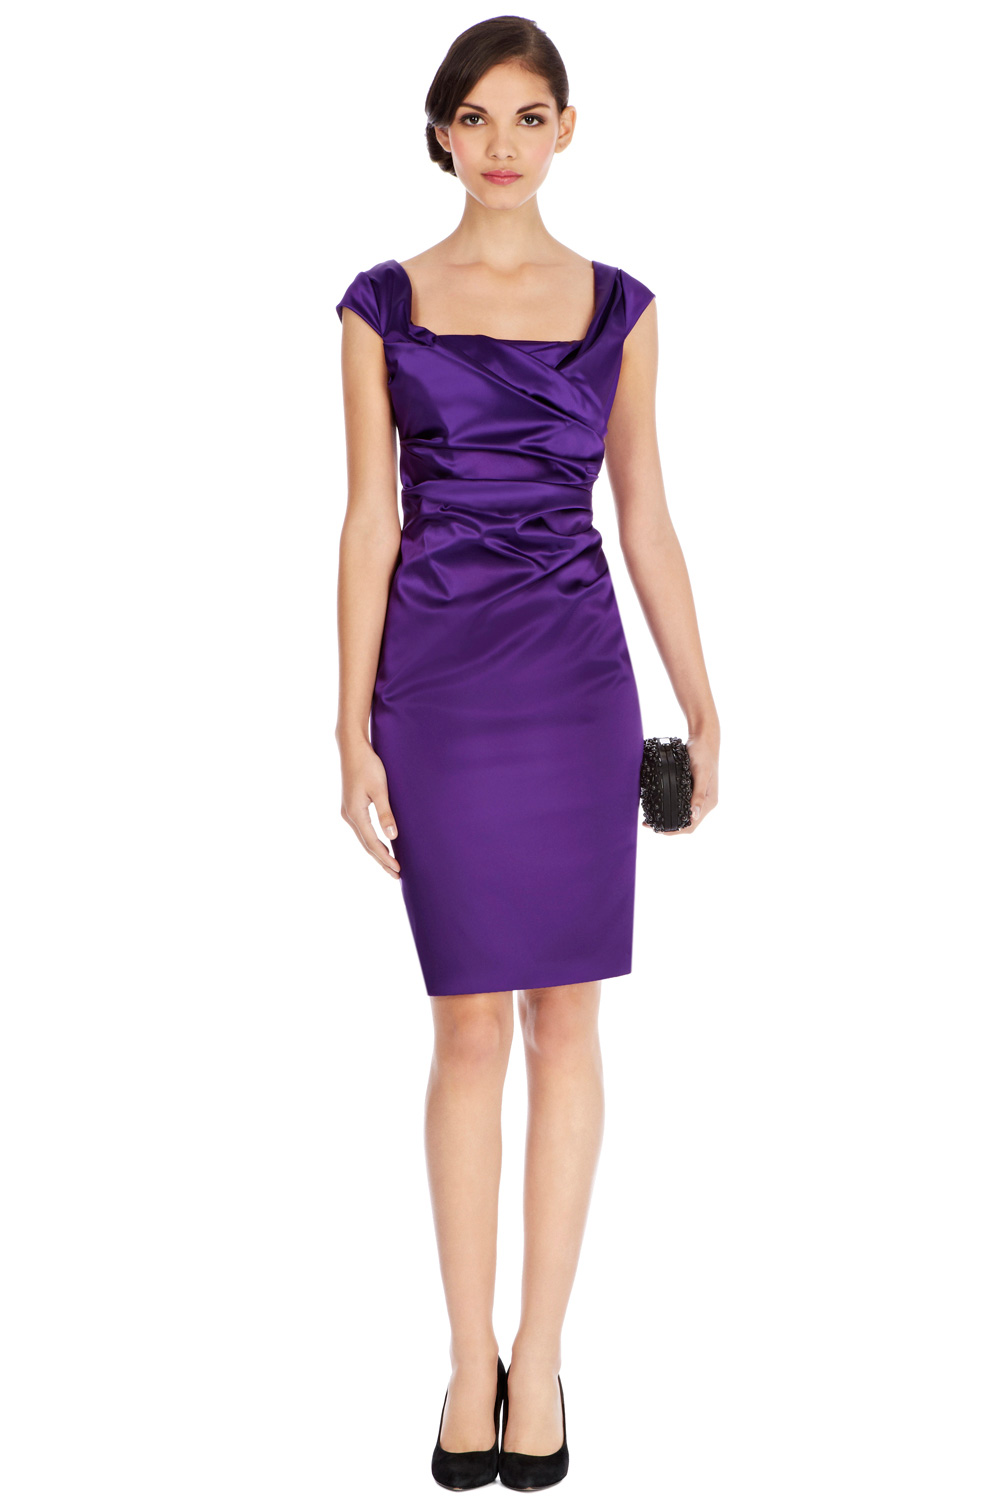 Lyst - Coast Alva Duchess Satin Dress in Purple